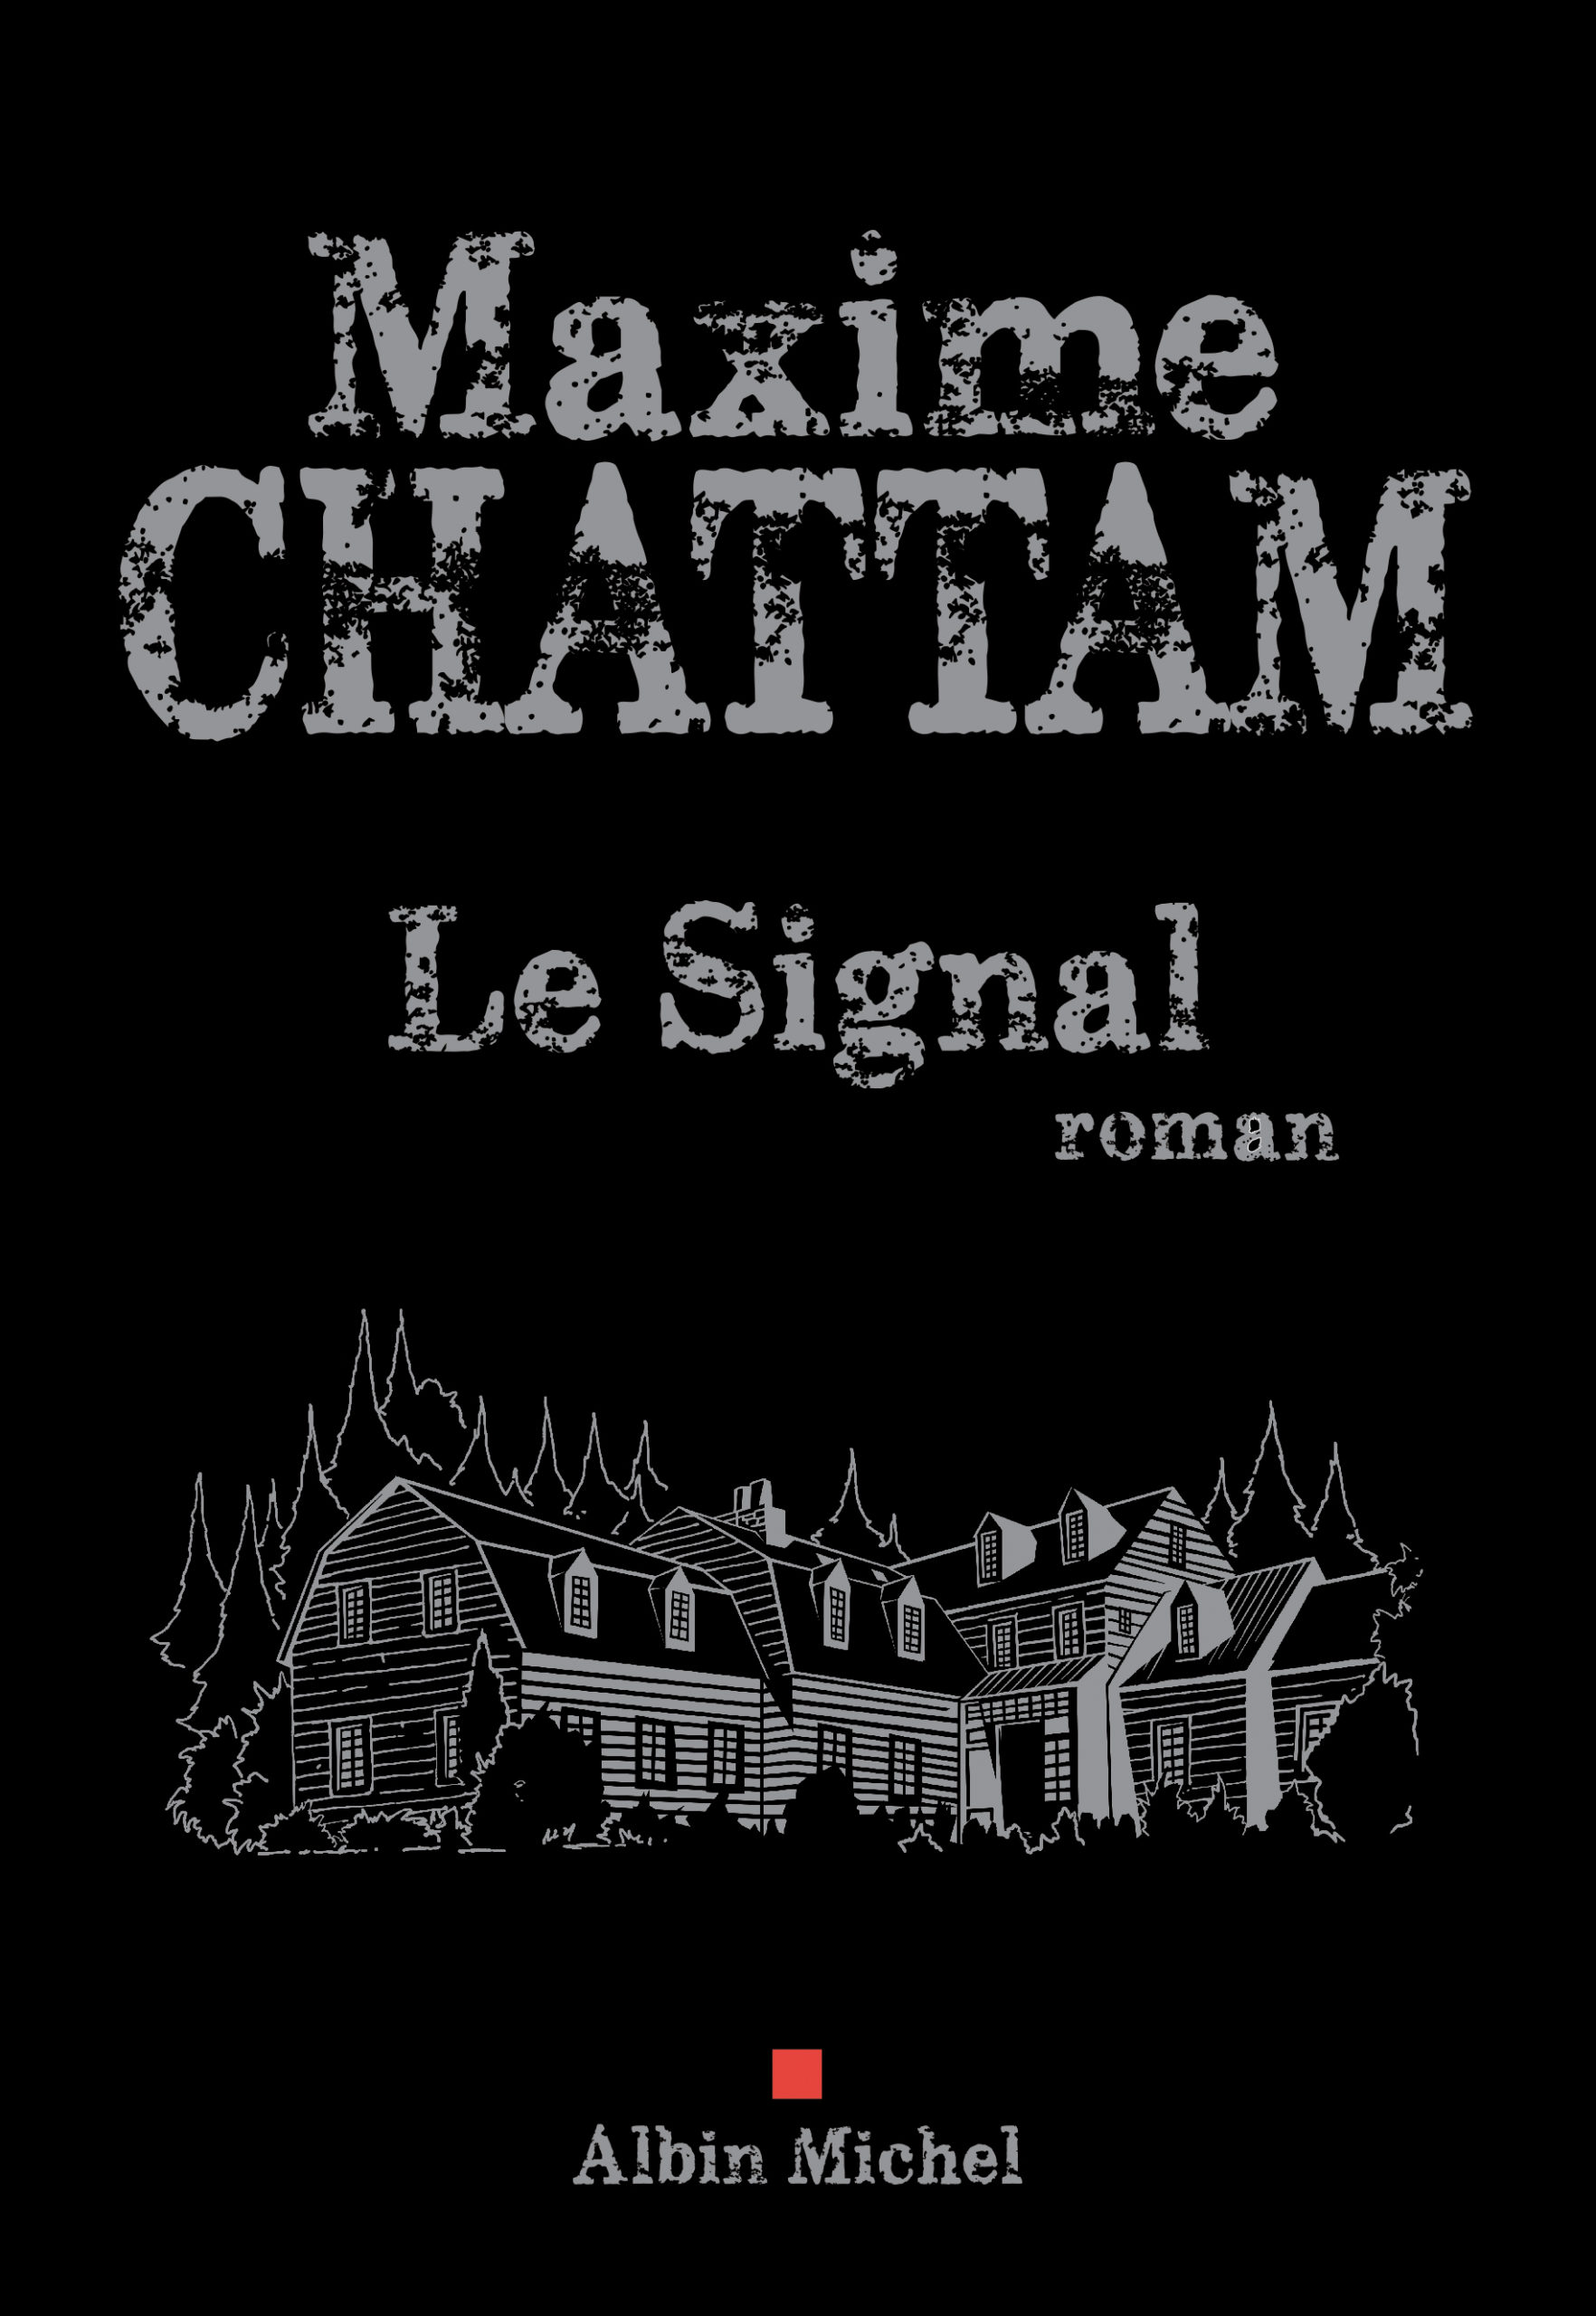 Le signal de Maxime Chattam